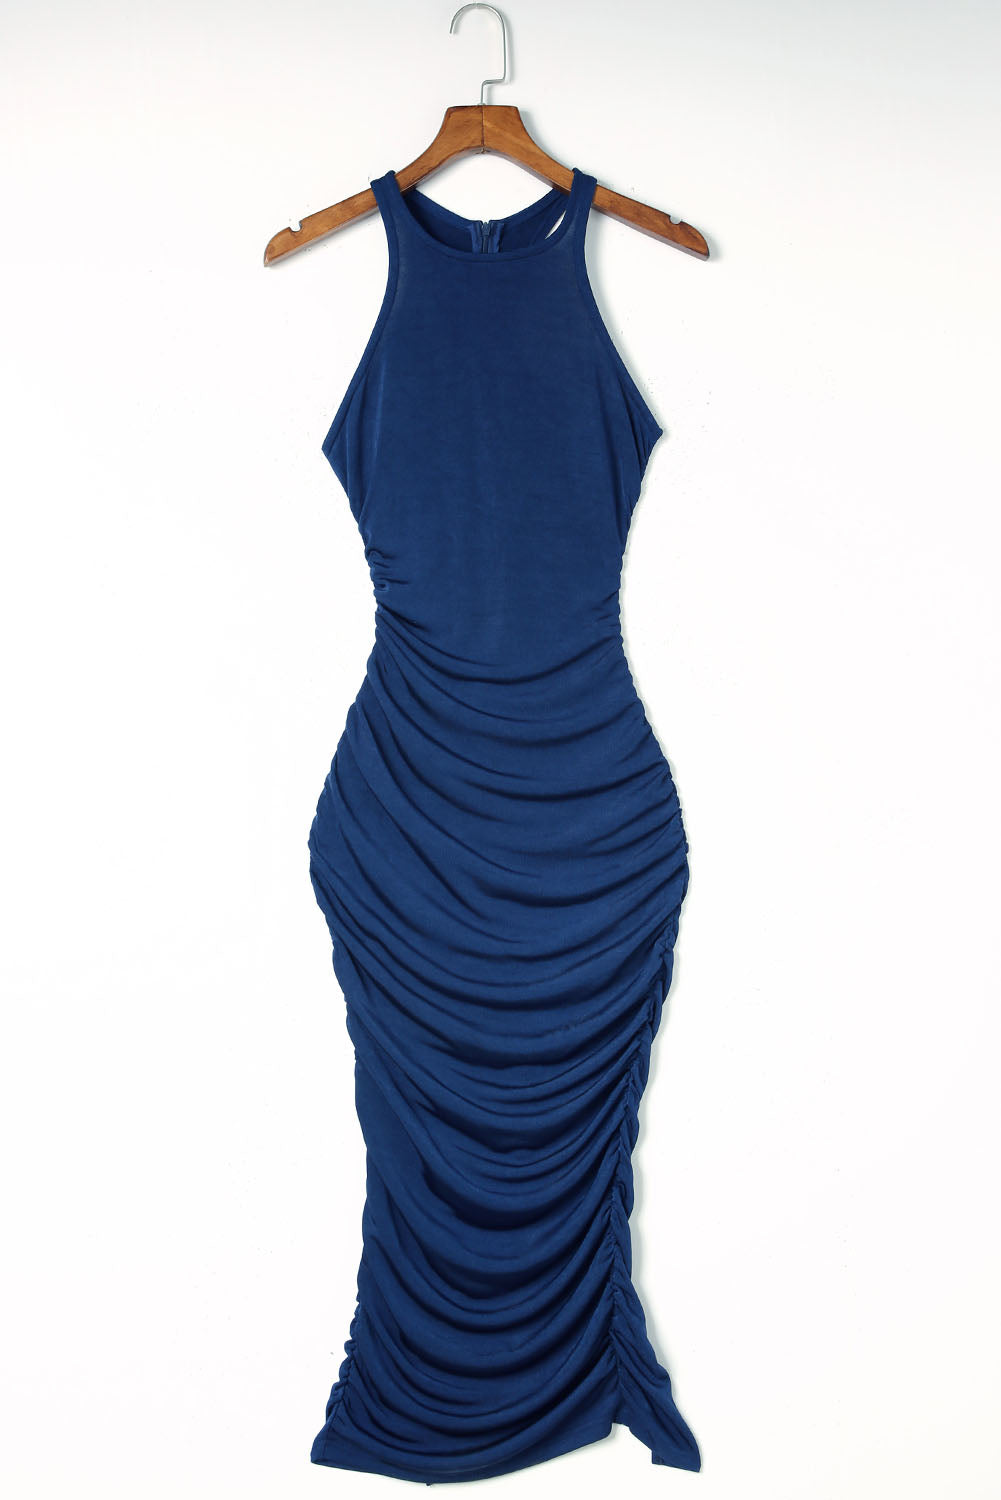 Razor Back Ruched Dress (Blue)